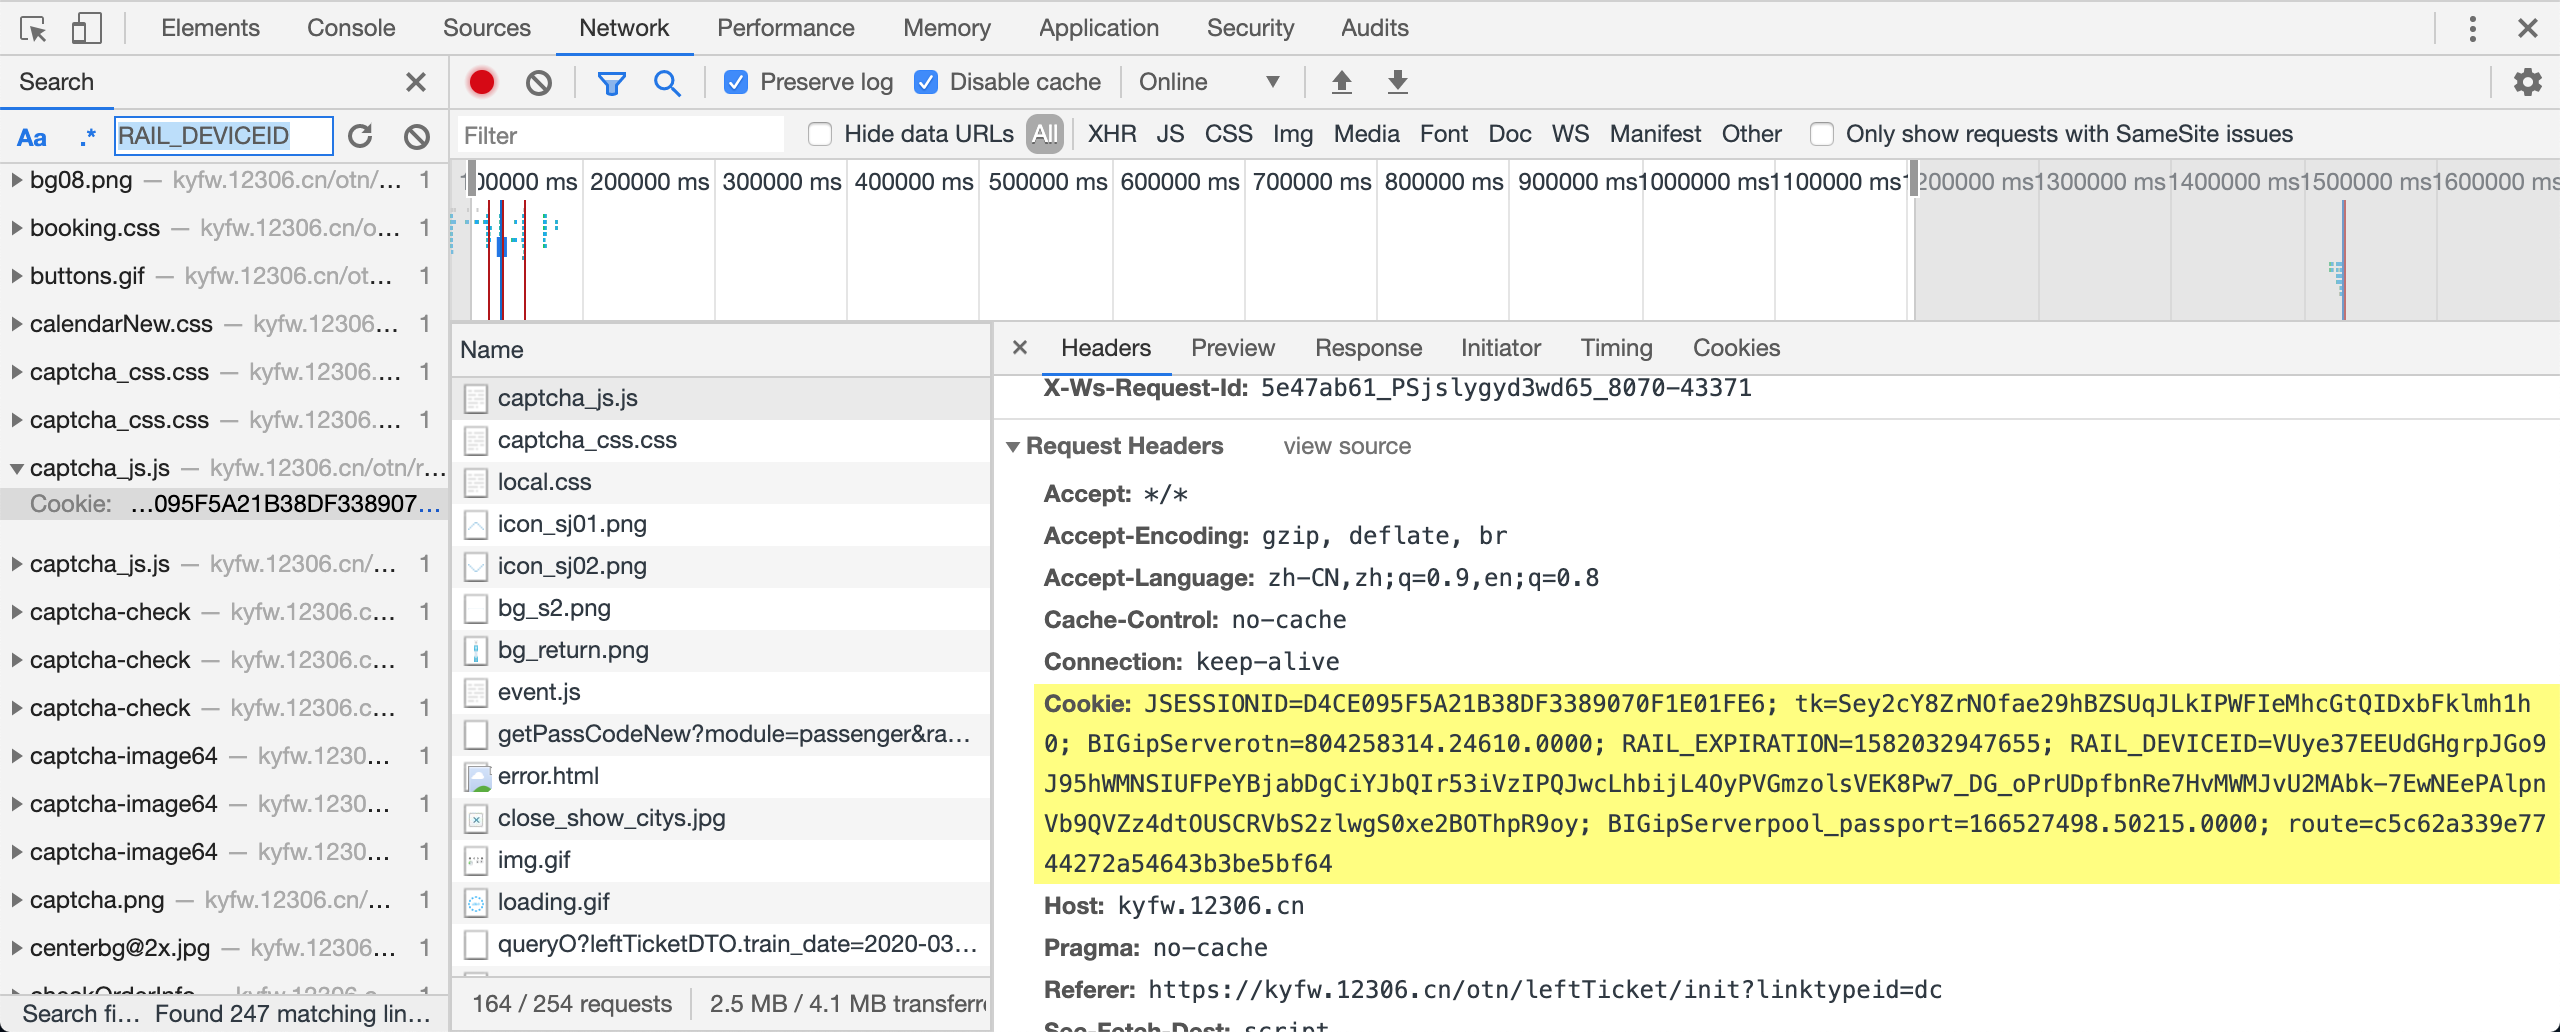 12306-algorithm-web-js-network-search-js-cookie-analysis-RAIL_DEVICEID.png